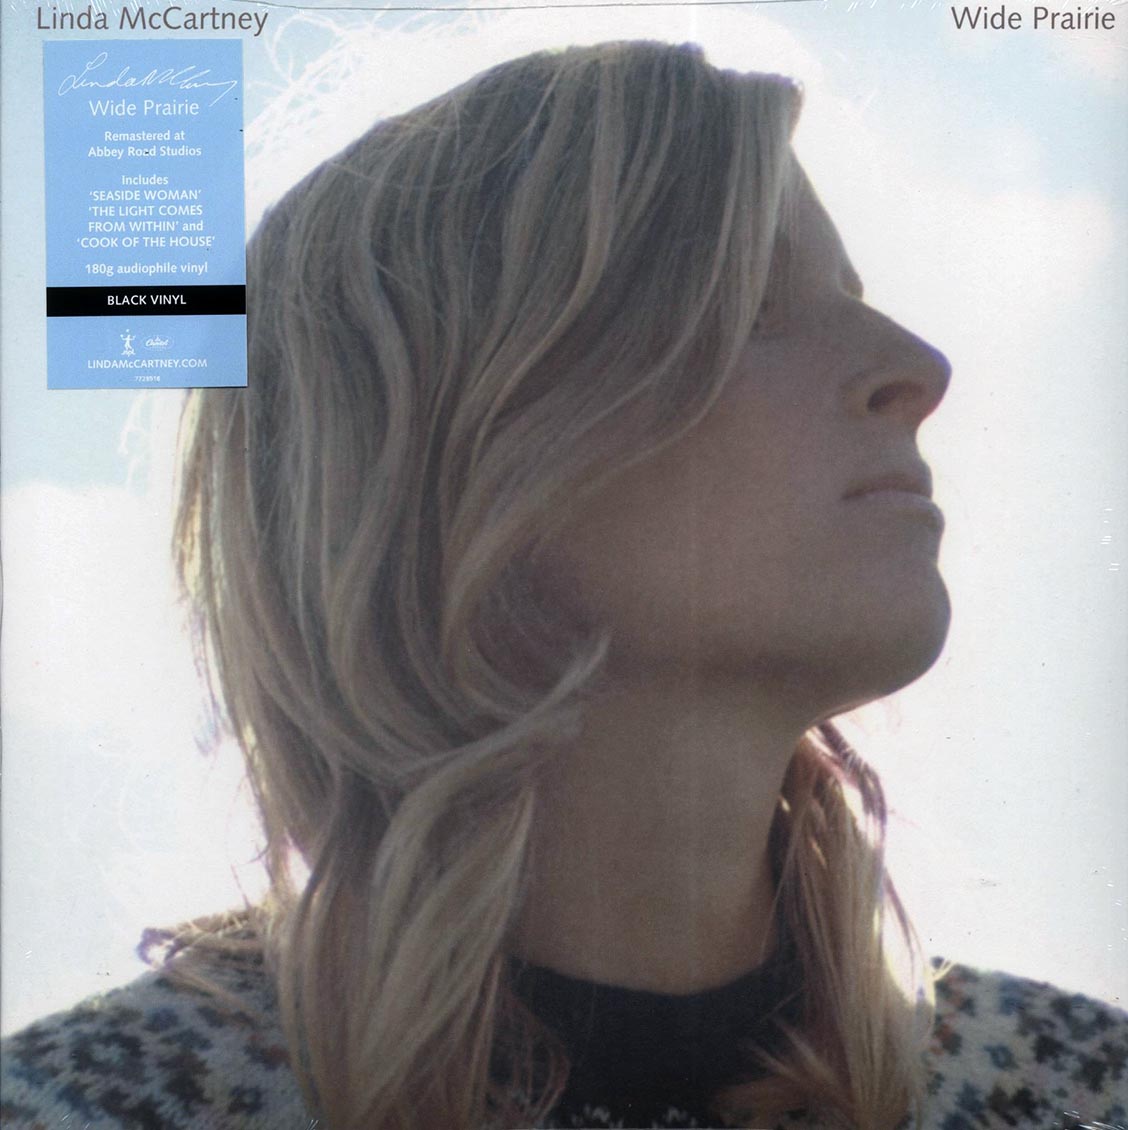 Linda McCartney - Wide Prairie [2019 Remastered 180G] [New Vinyl Record LP]